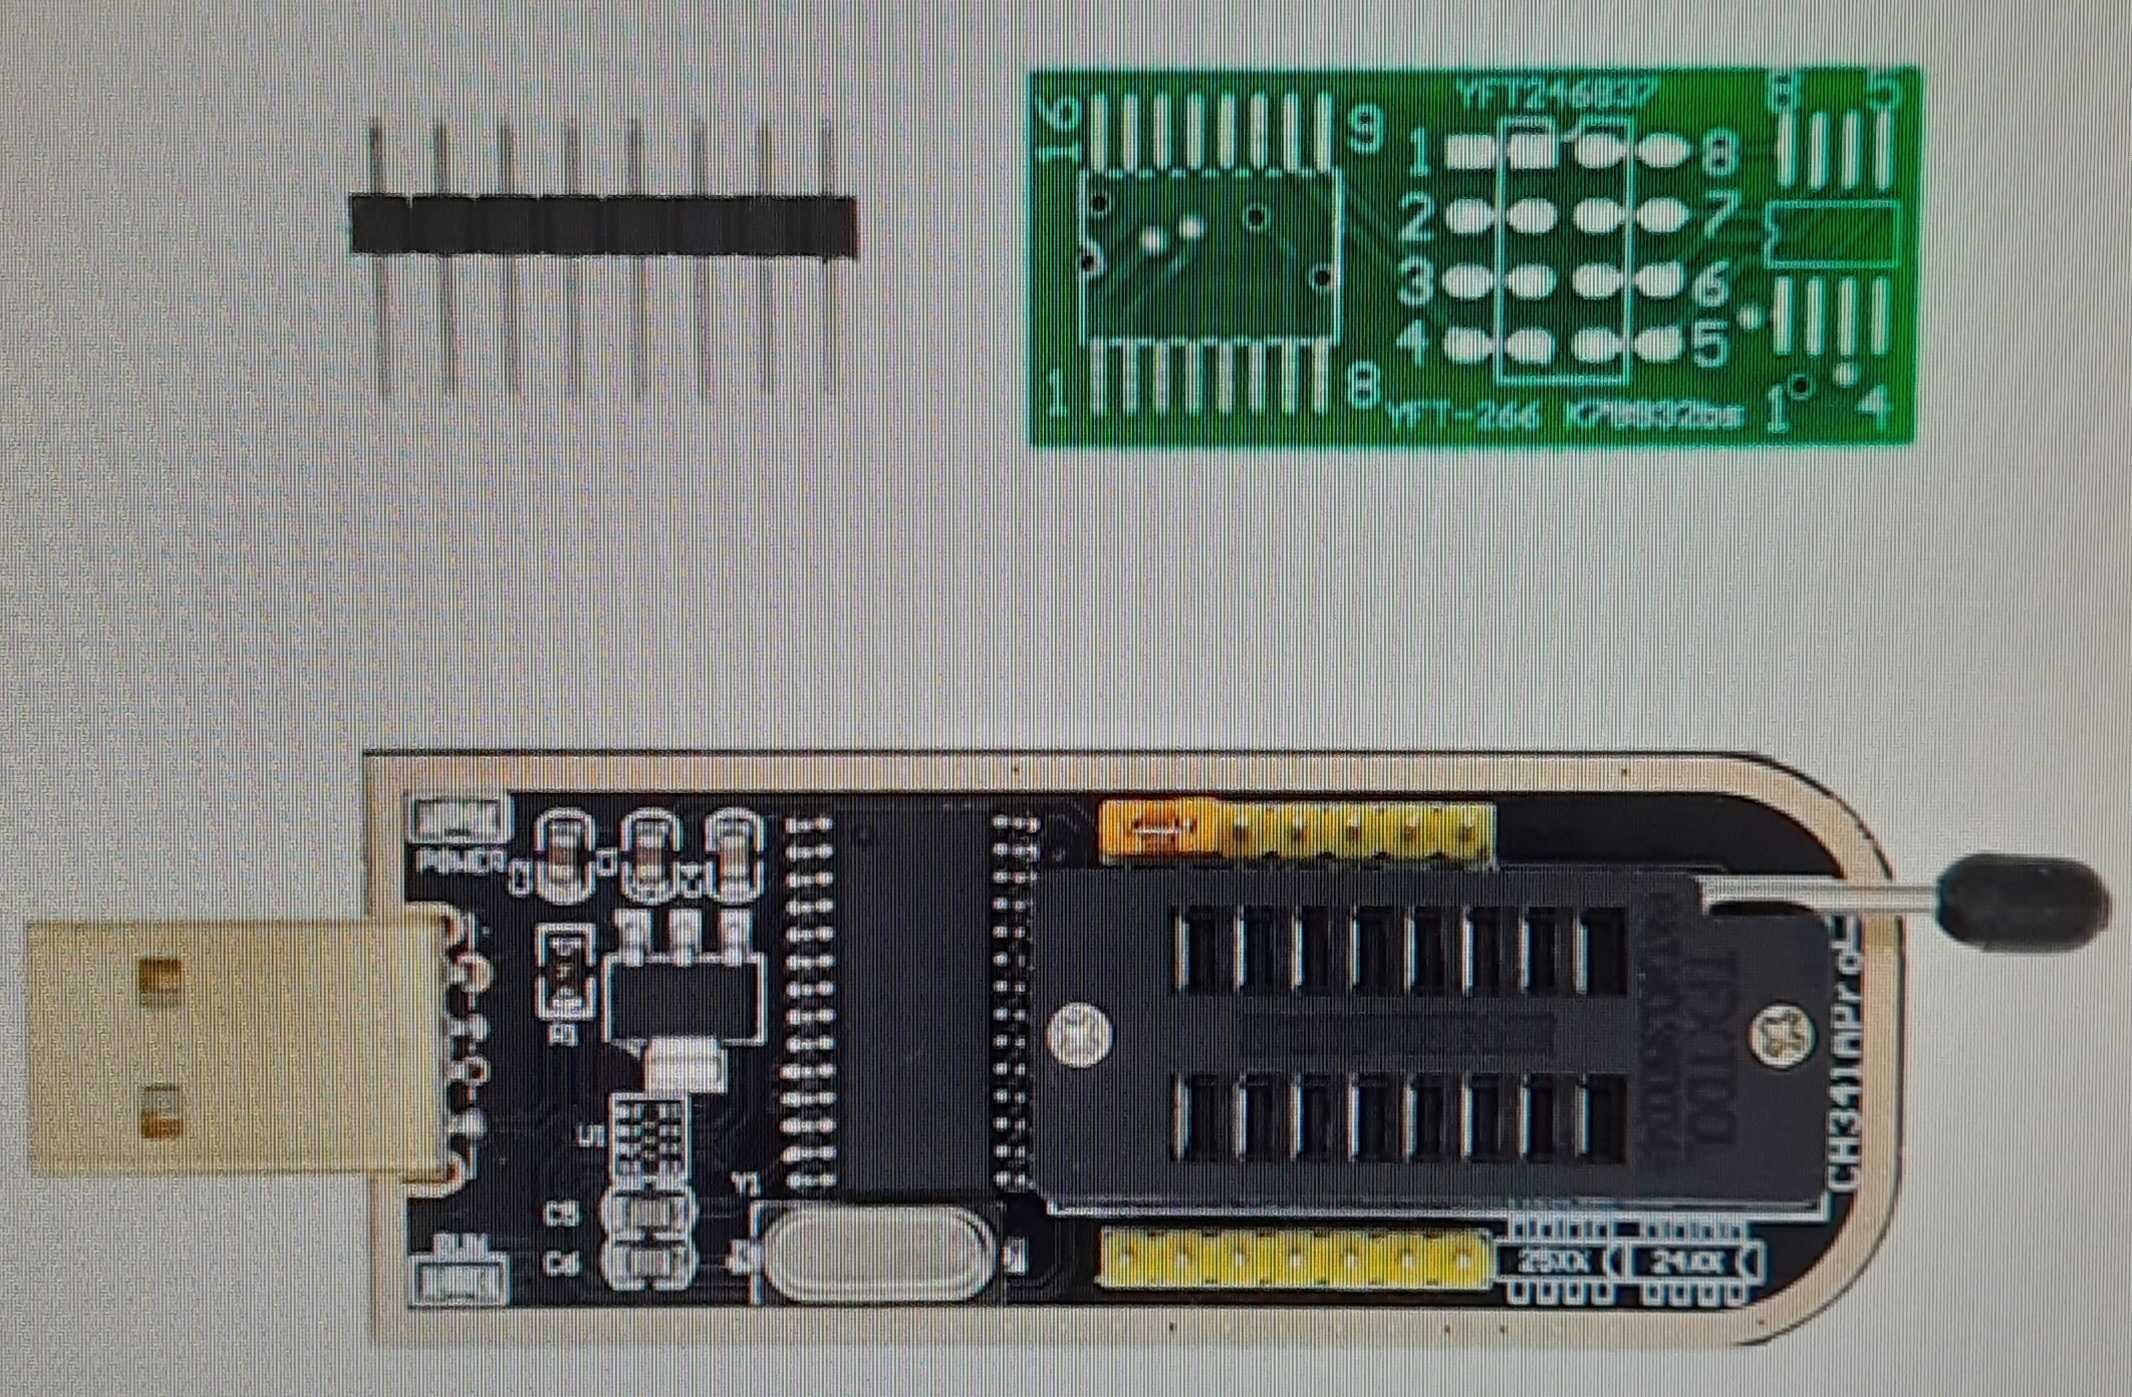 Программатор CH341A USB для EEPROM / FLASH 24 / 25 серии